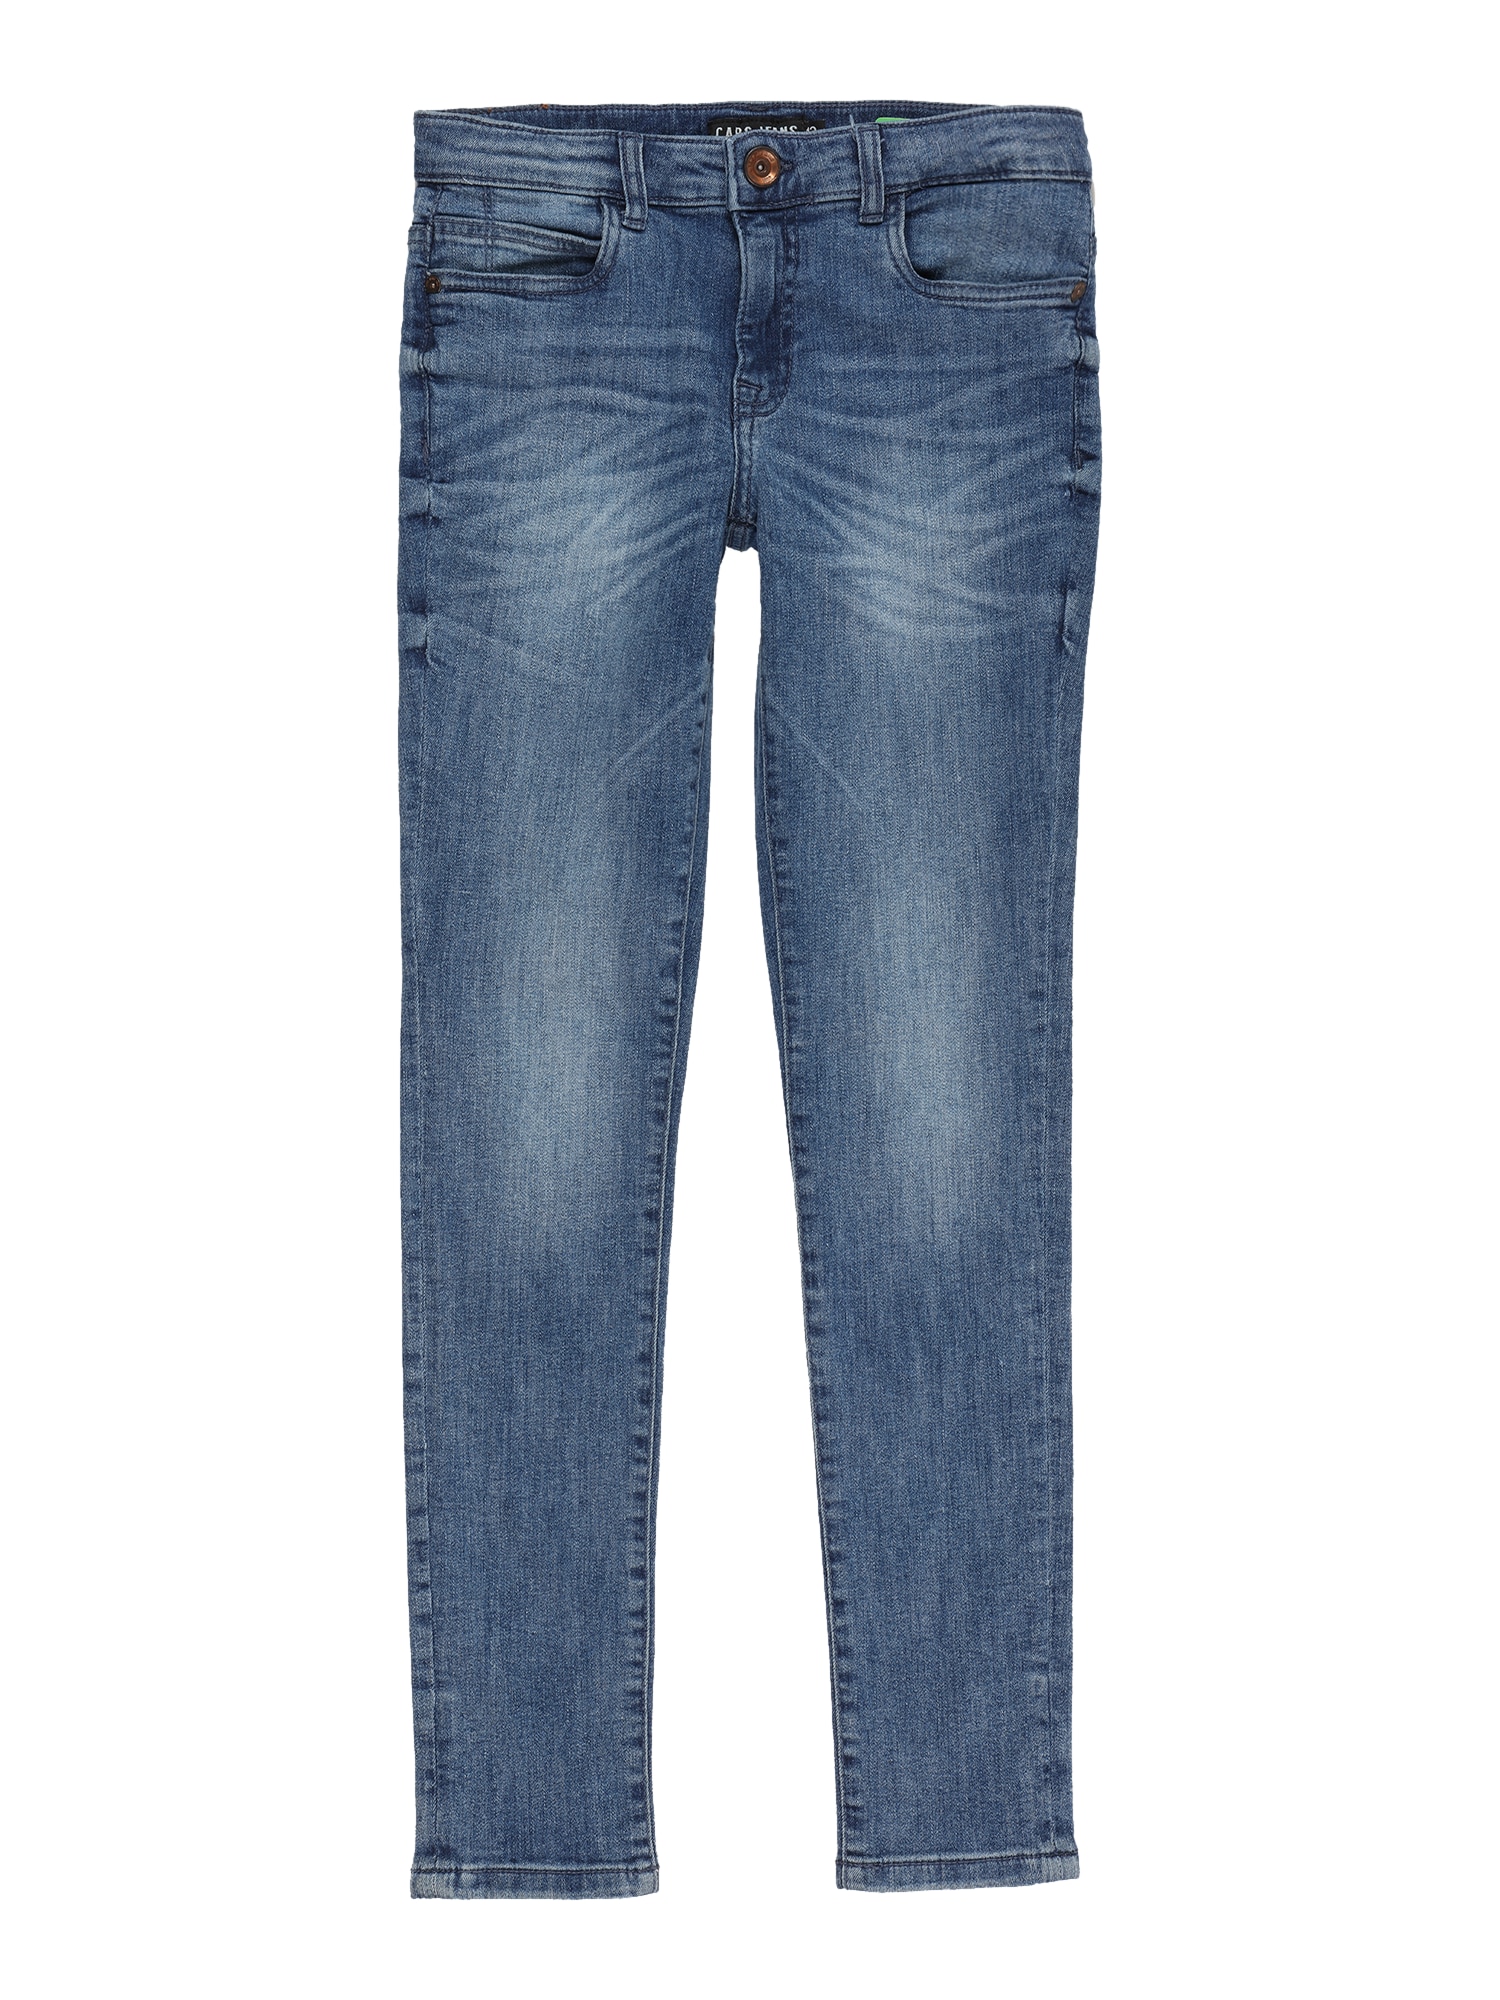 Cars Jeans Džinsai 'CLEVELAND' tamsiai (džinso) mėlyna